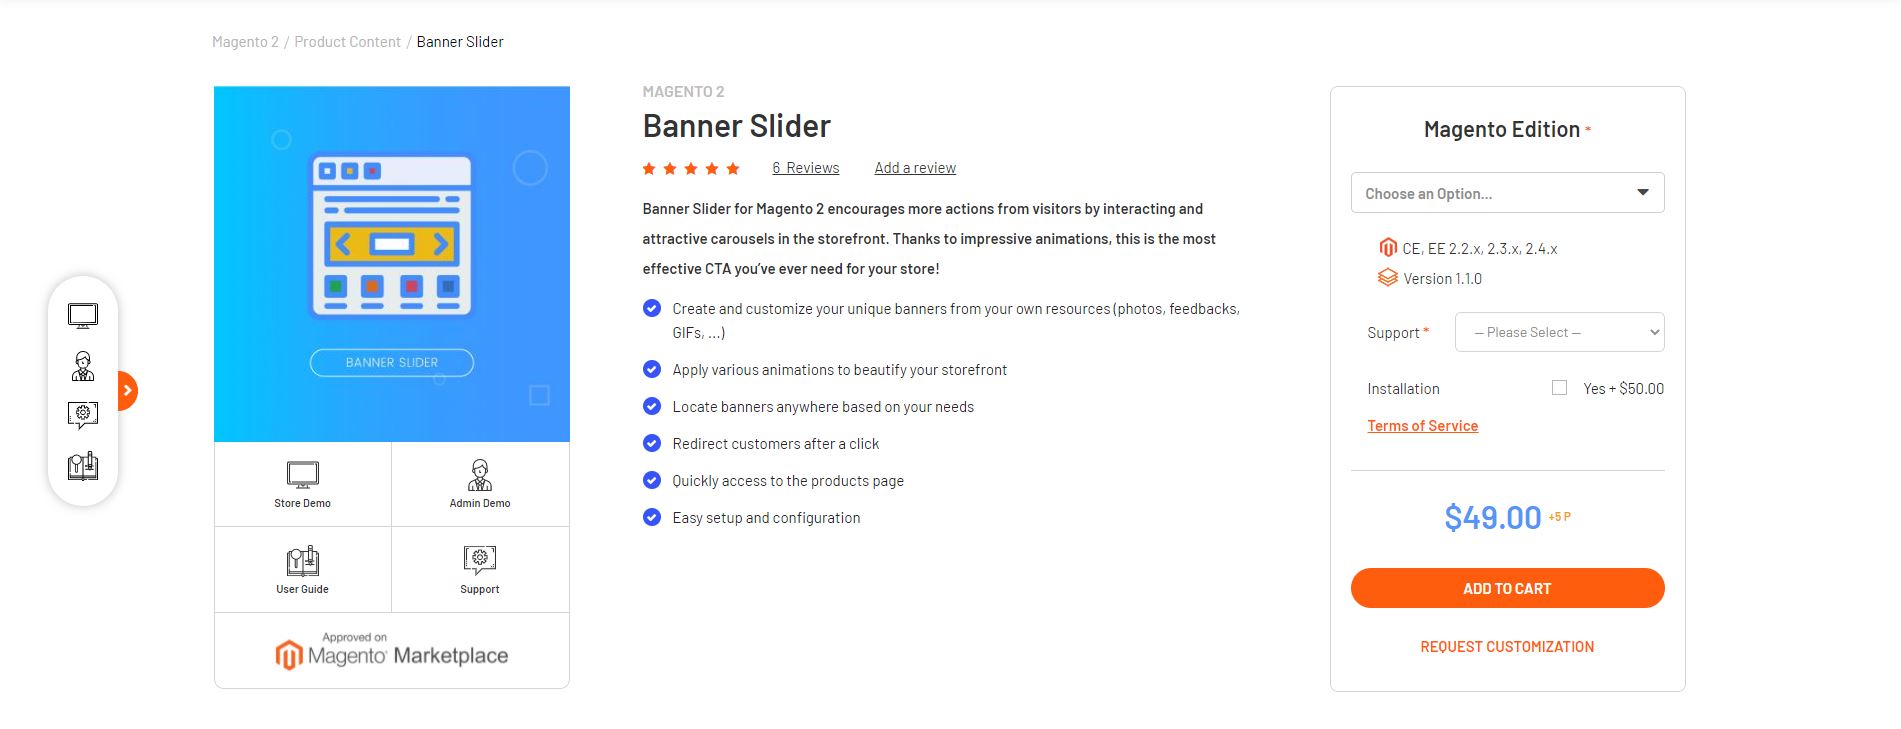 Magento banner slider extension: